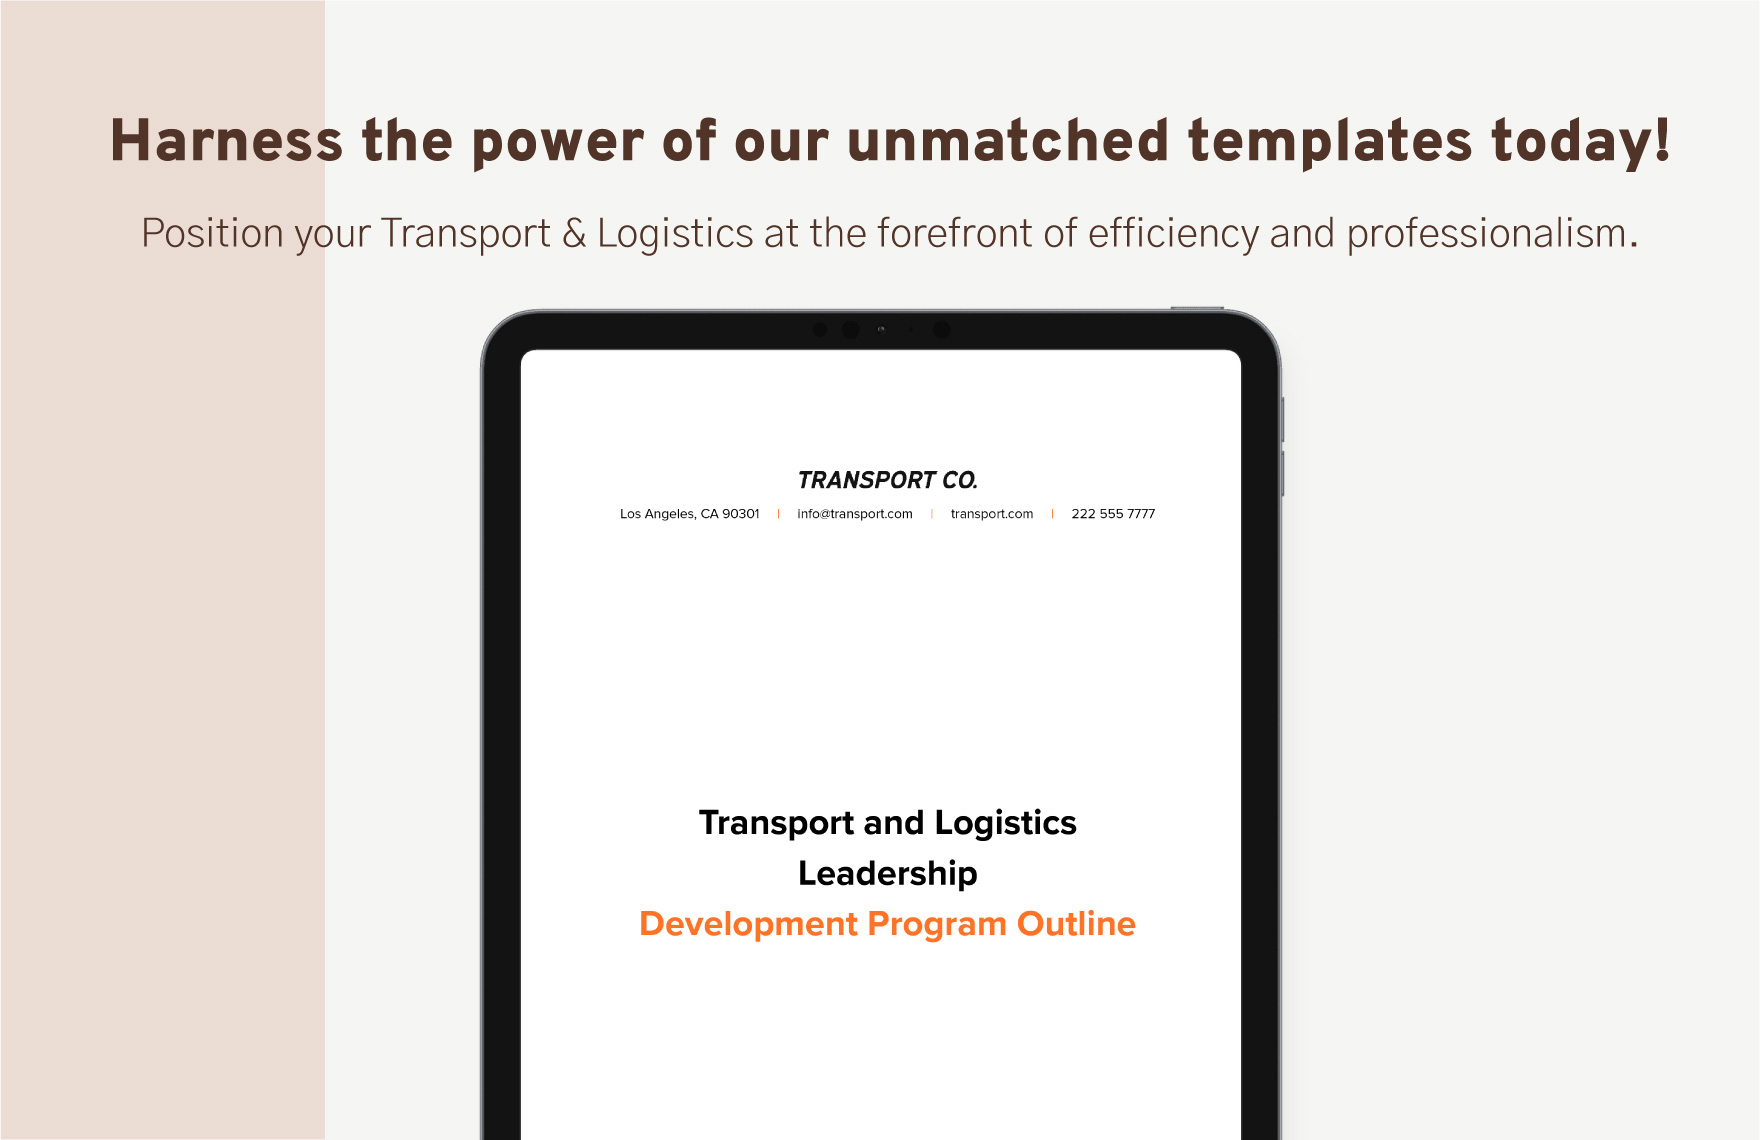 Transport and Logistics Leadership Development Program Outline Template